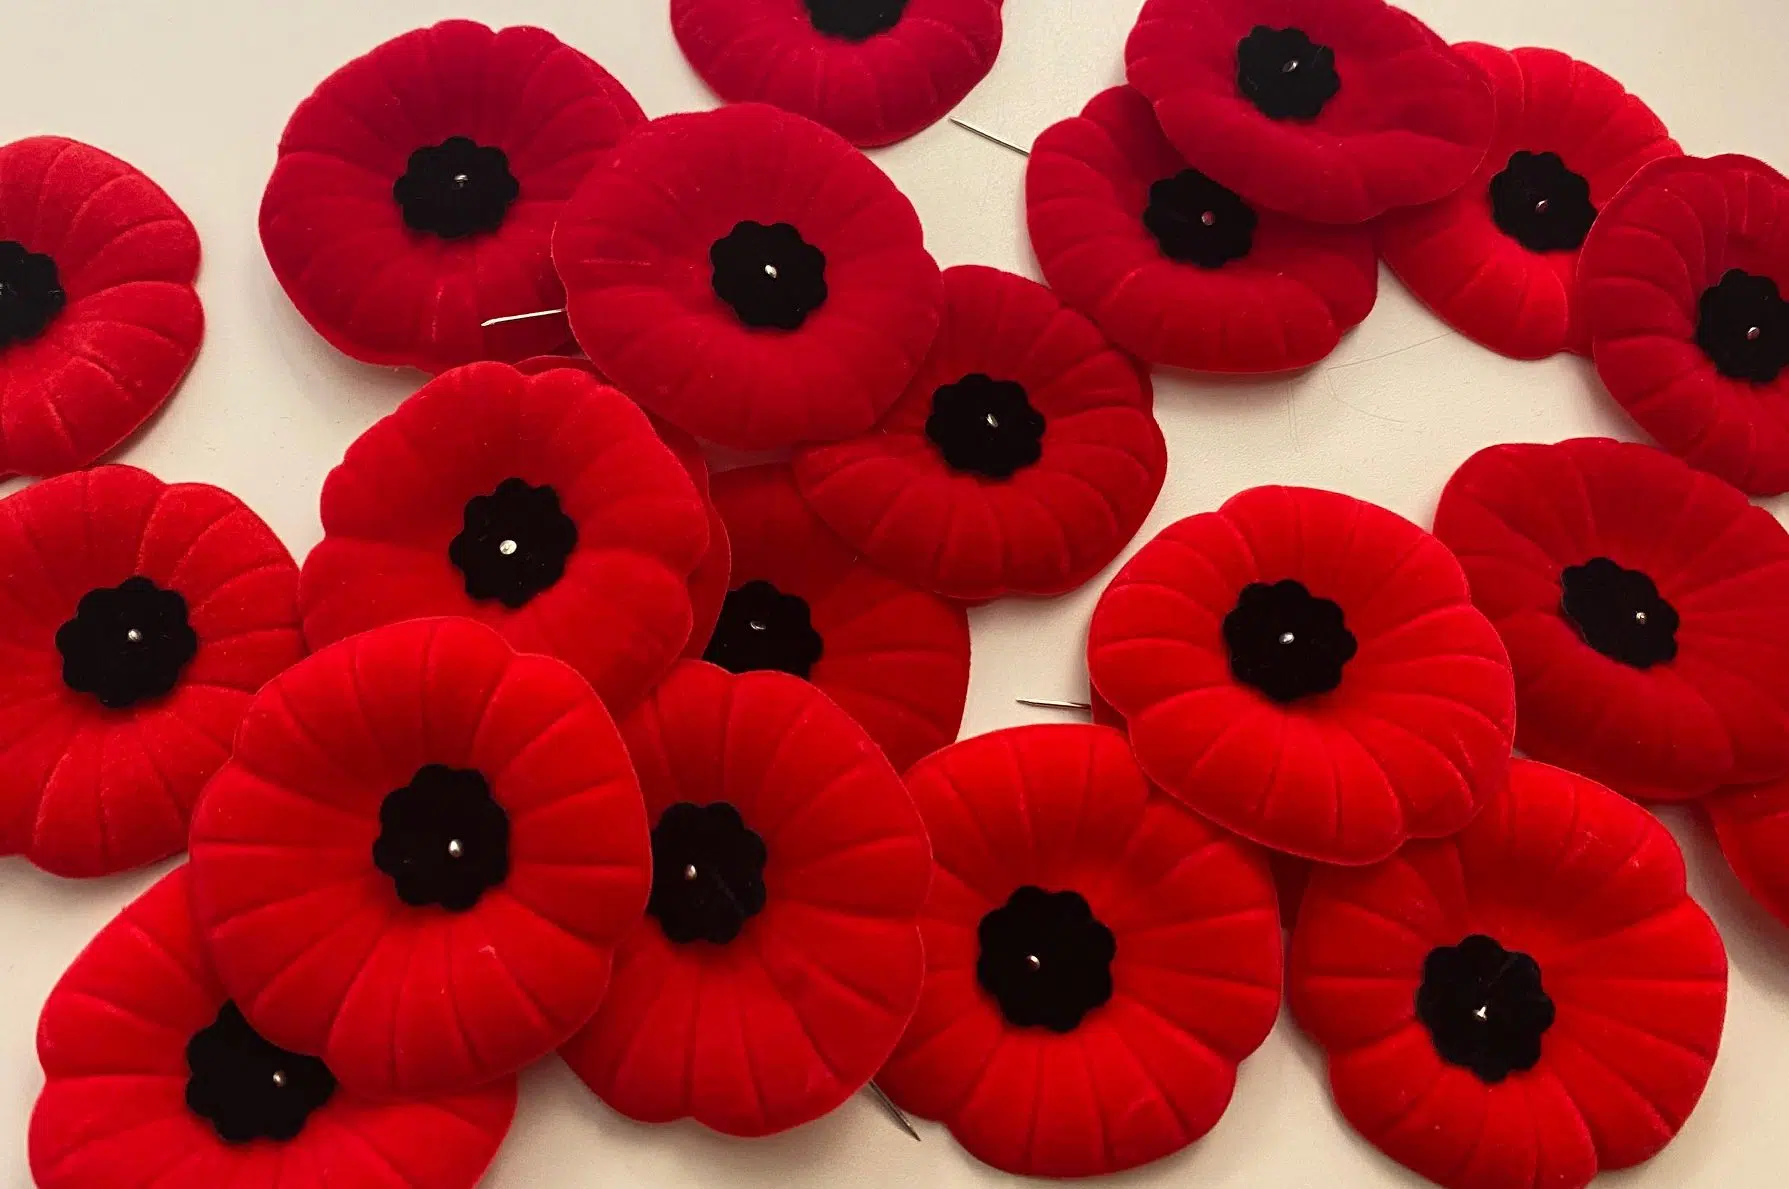 Royal Canadian Legion's Poppy Campaign kicks off in Saskatchewan